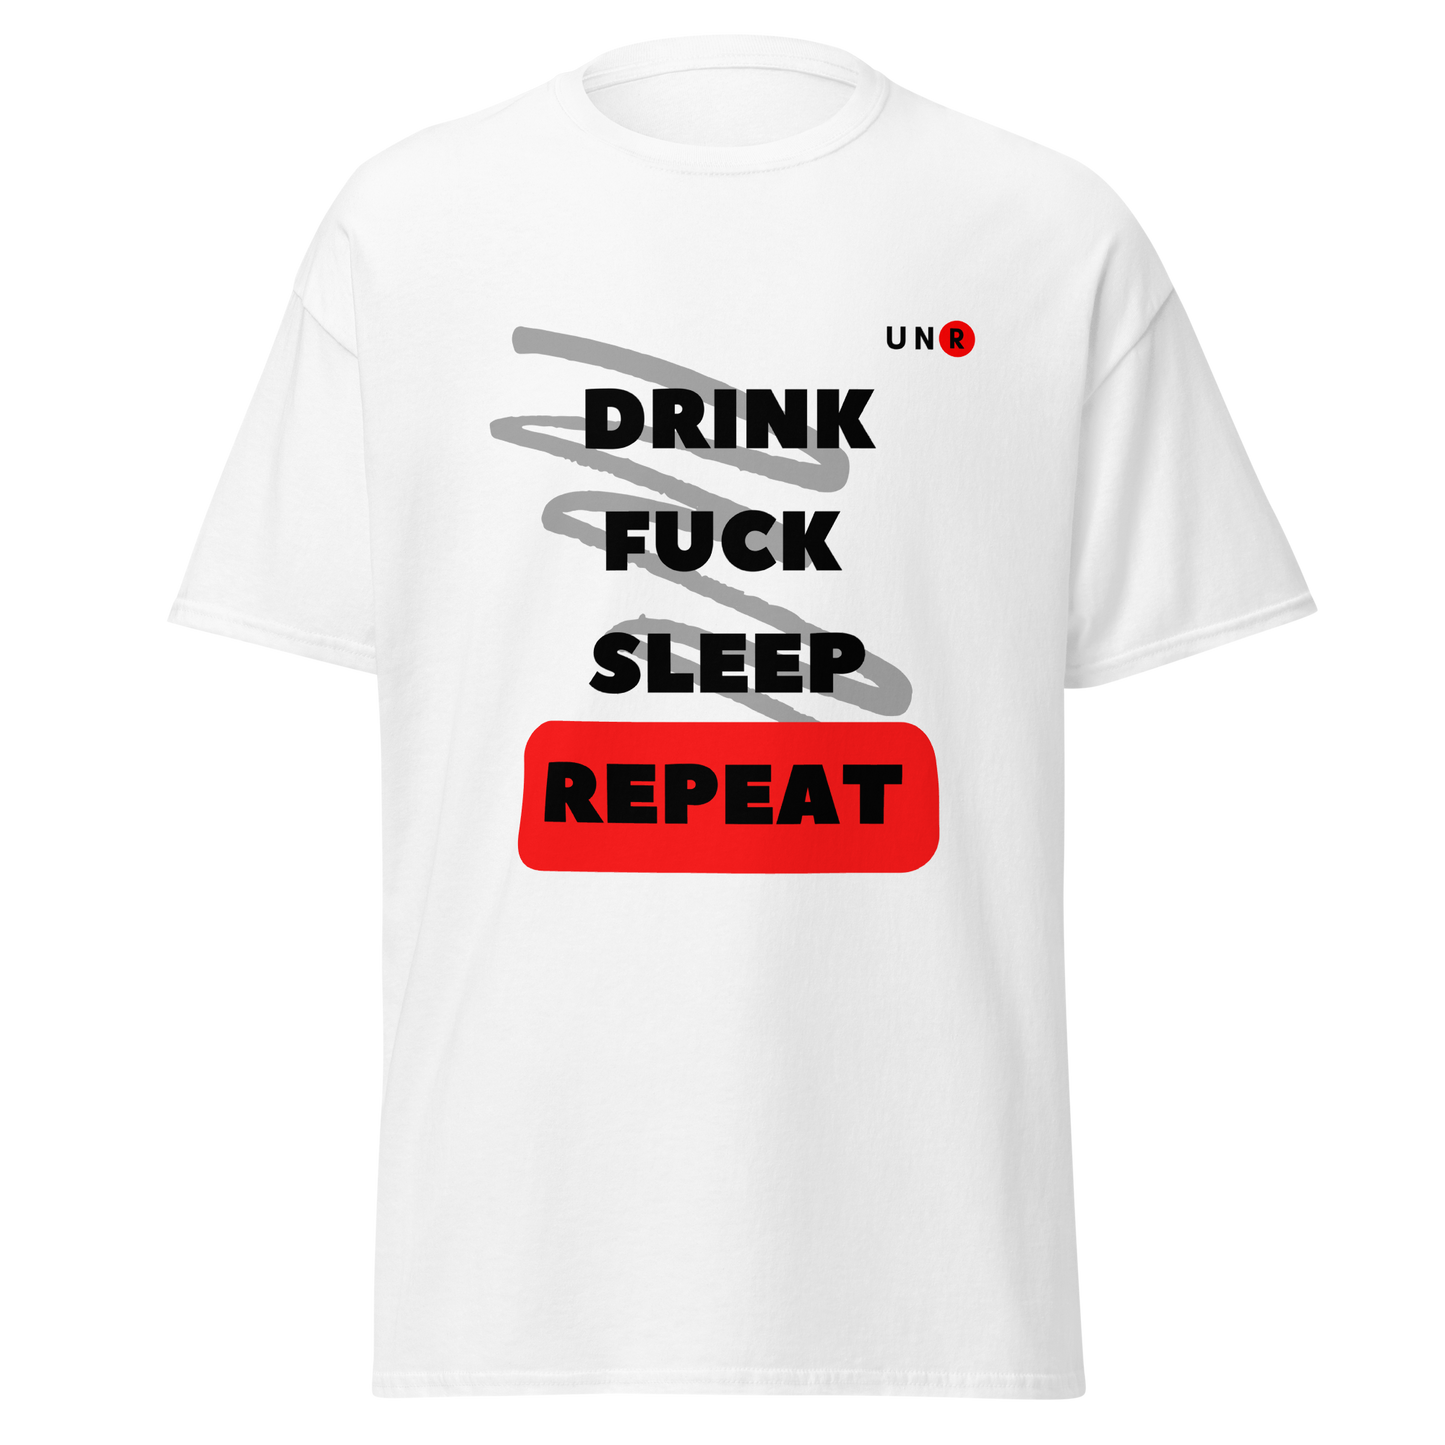 Drink, Fuck, Sleep, Repeat T-shirt